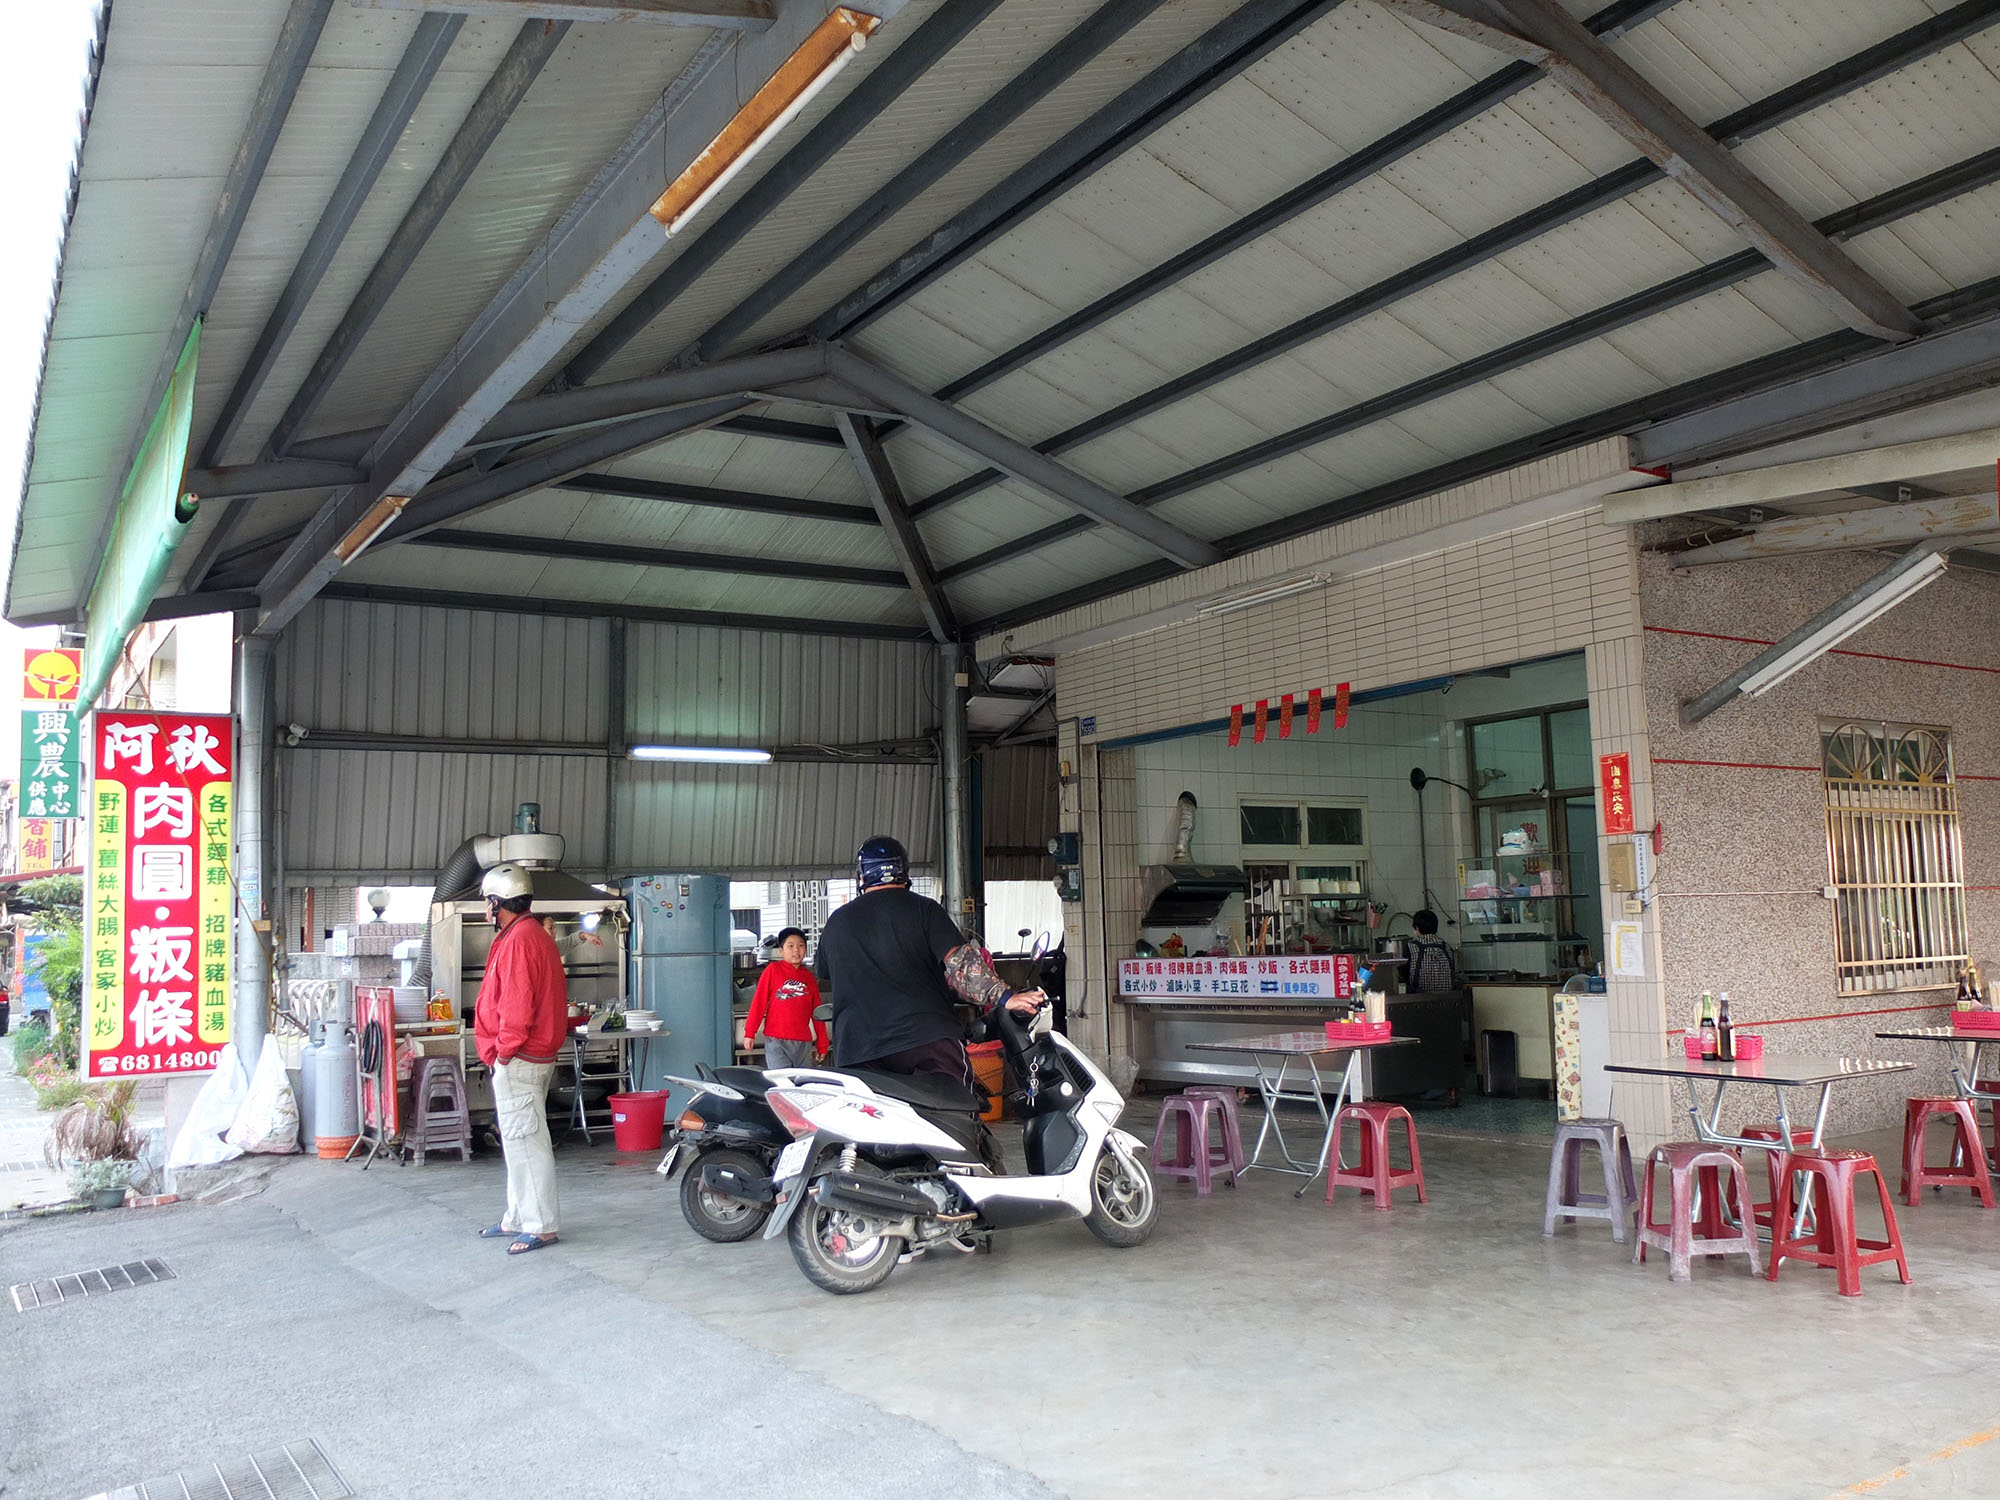 Ah Chiu Meatball and Flat Rice Noodle Shop